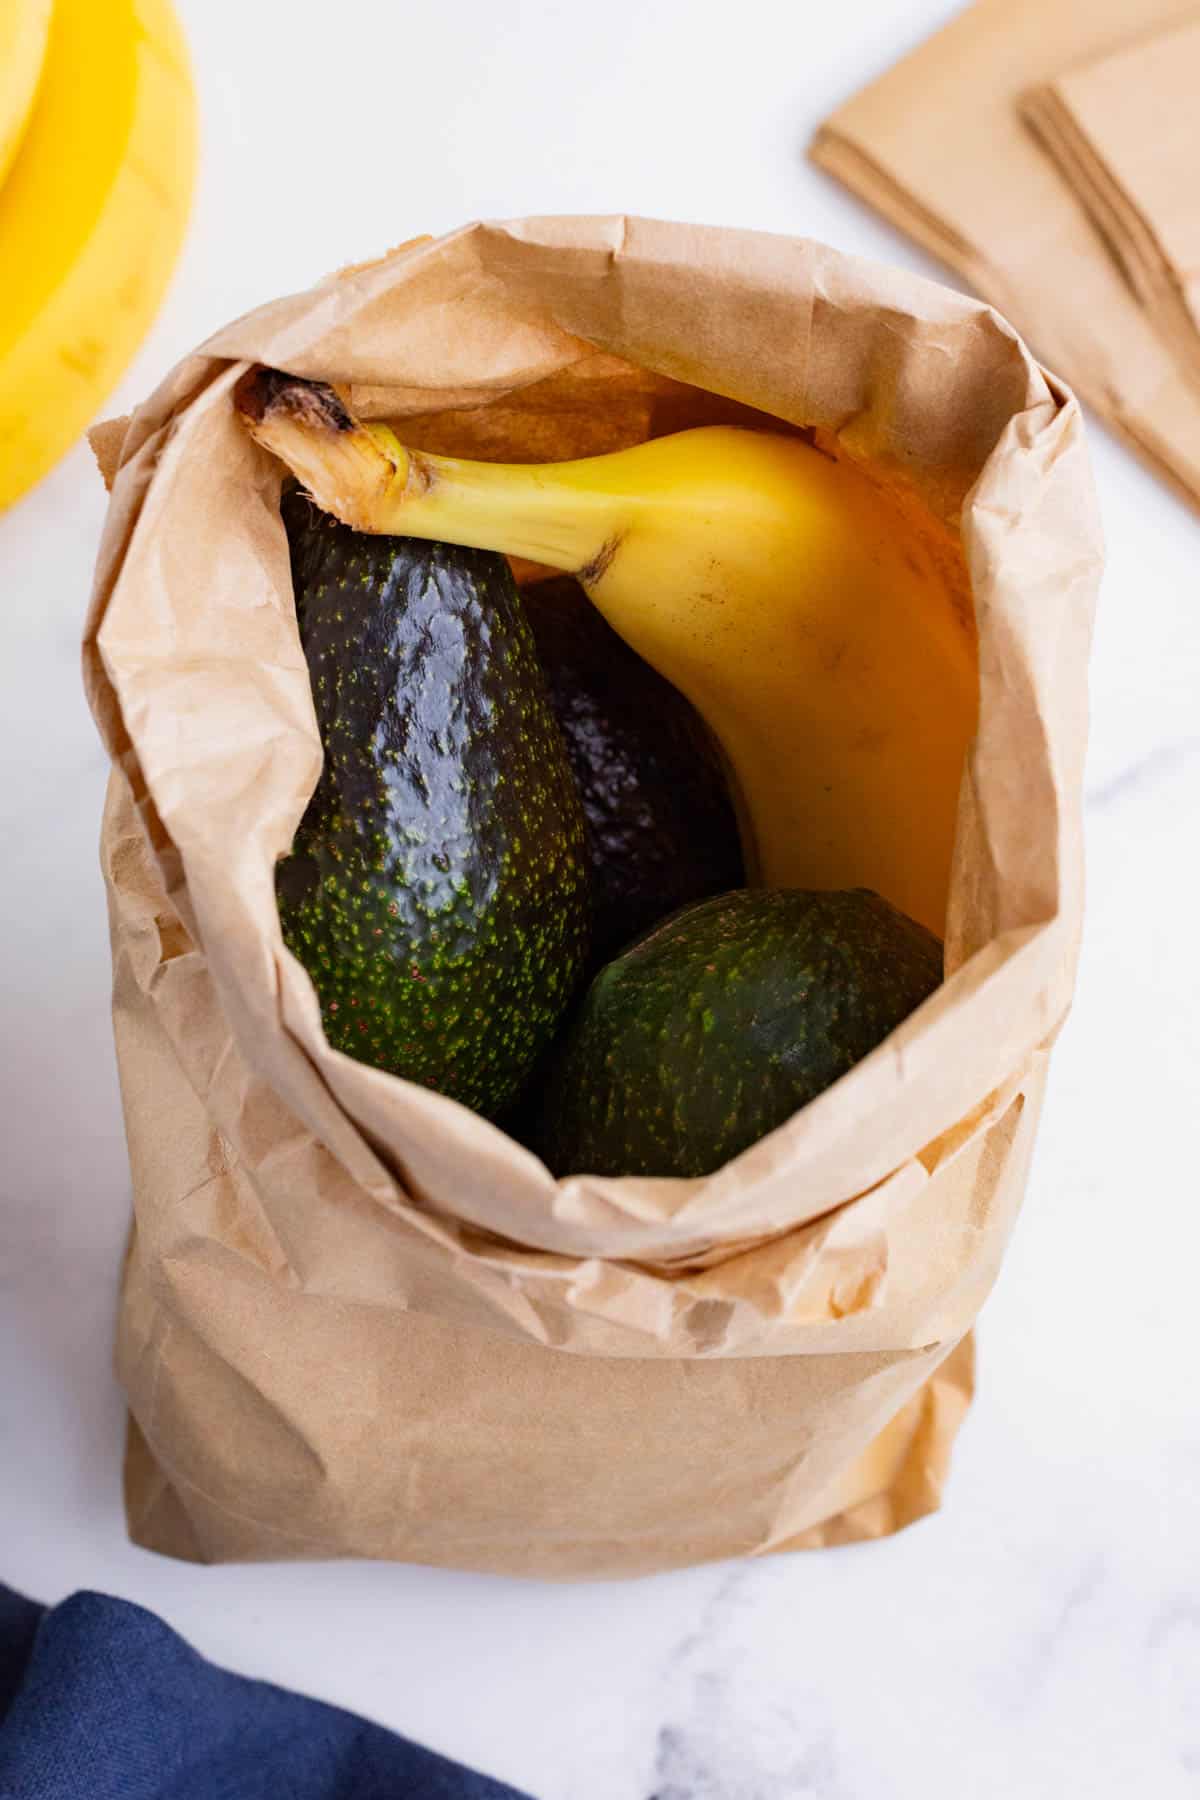 Avocados in a brown bag with a banana.